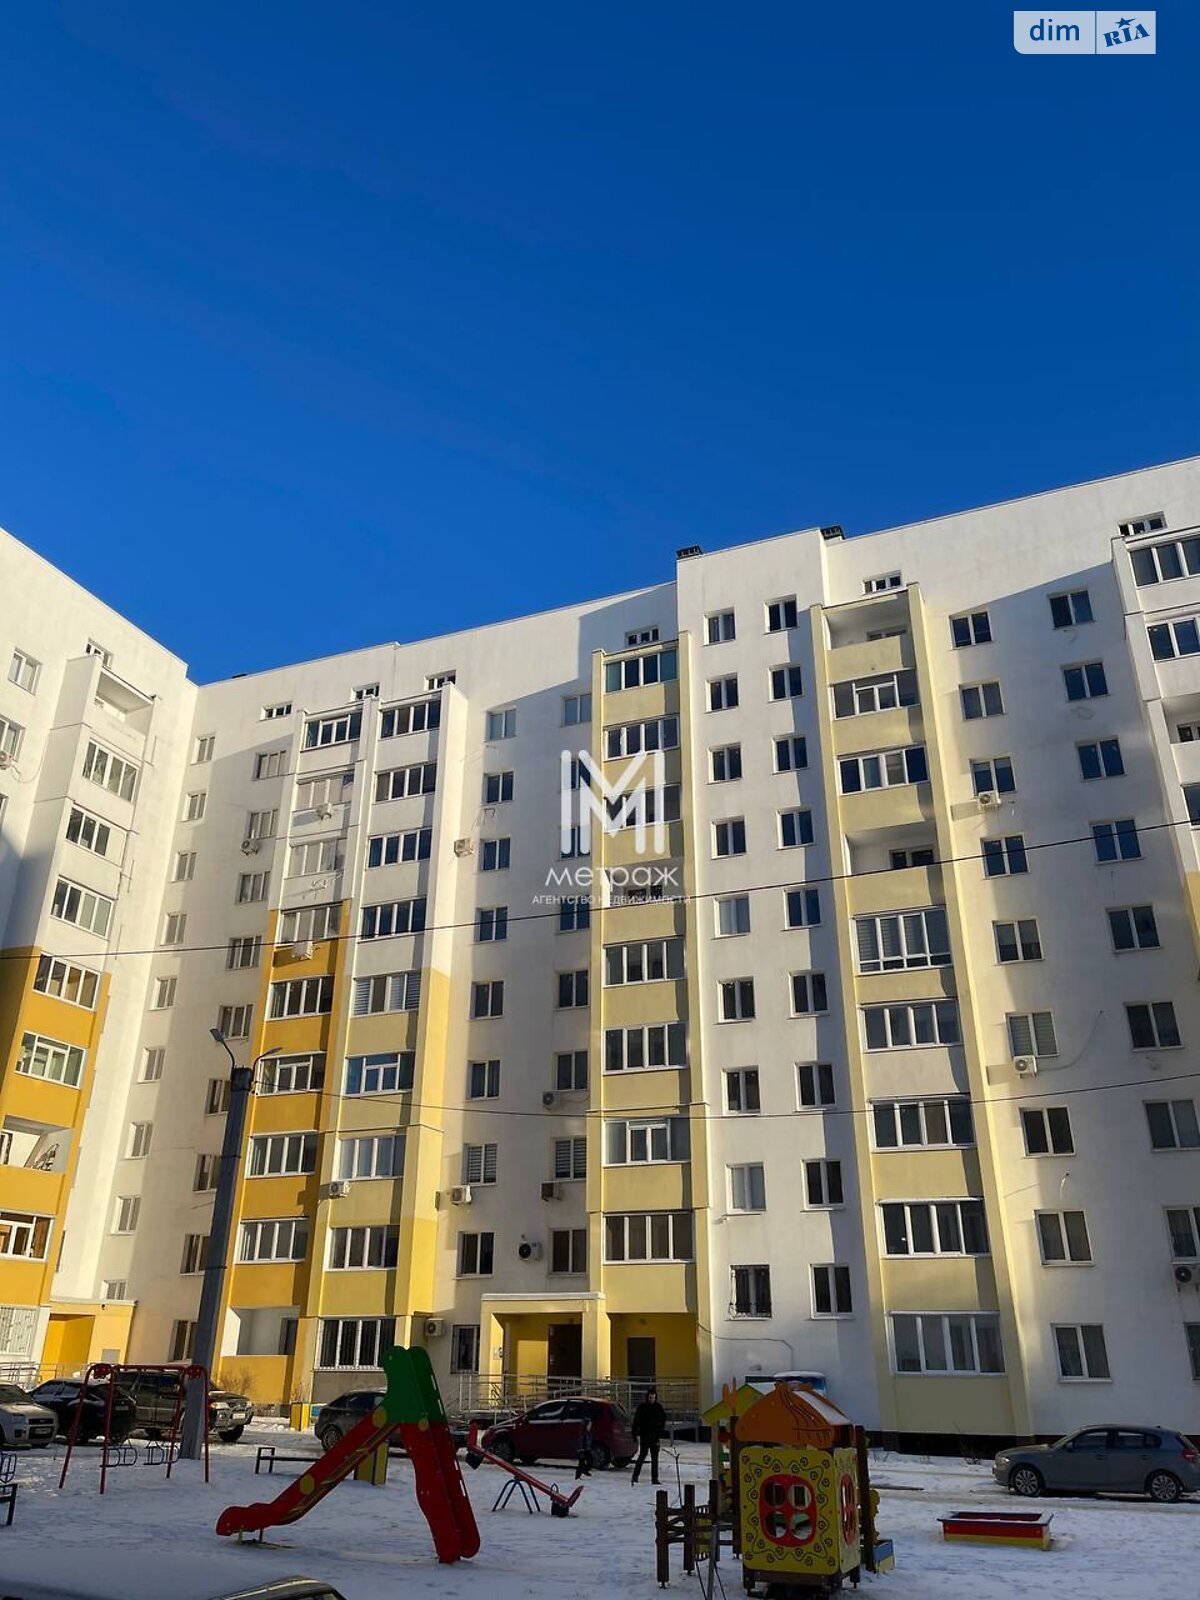 Продажа однокомнатной квартиры в Харькове, на ул. Мира 21, район ХТЗ фото 1